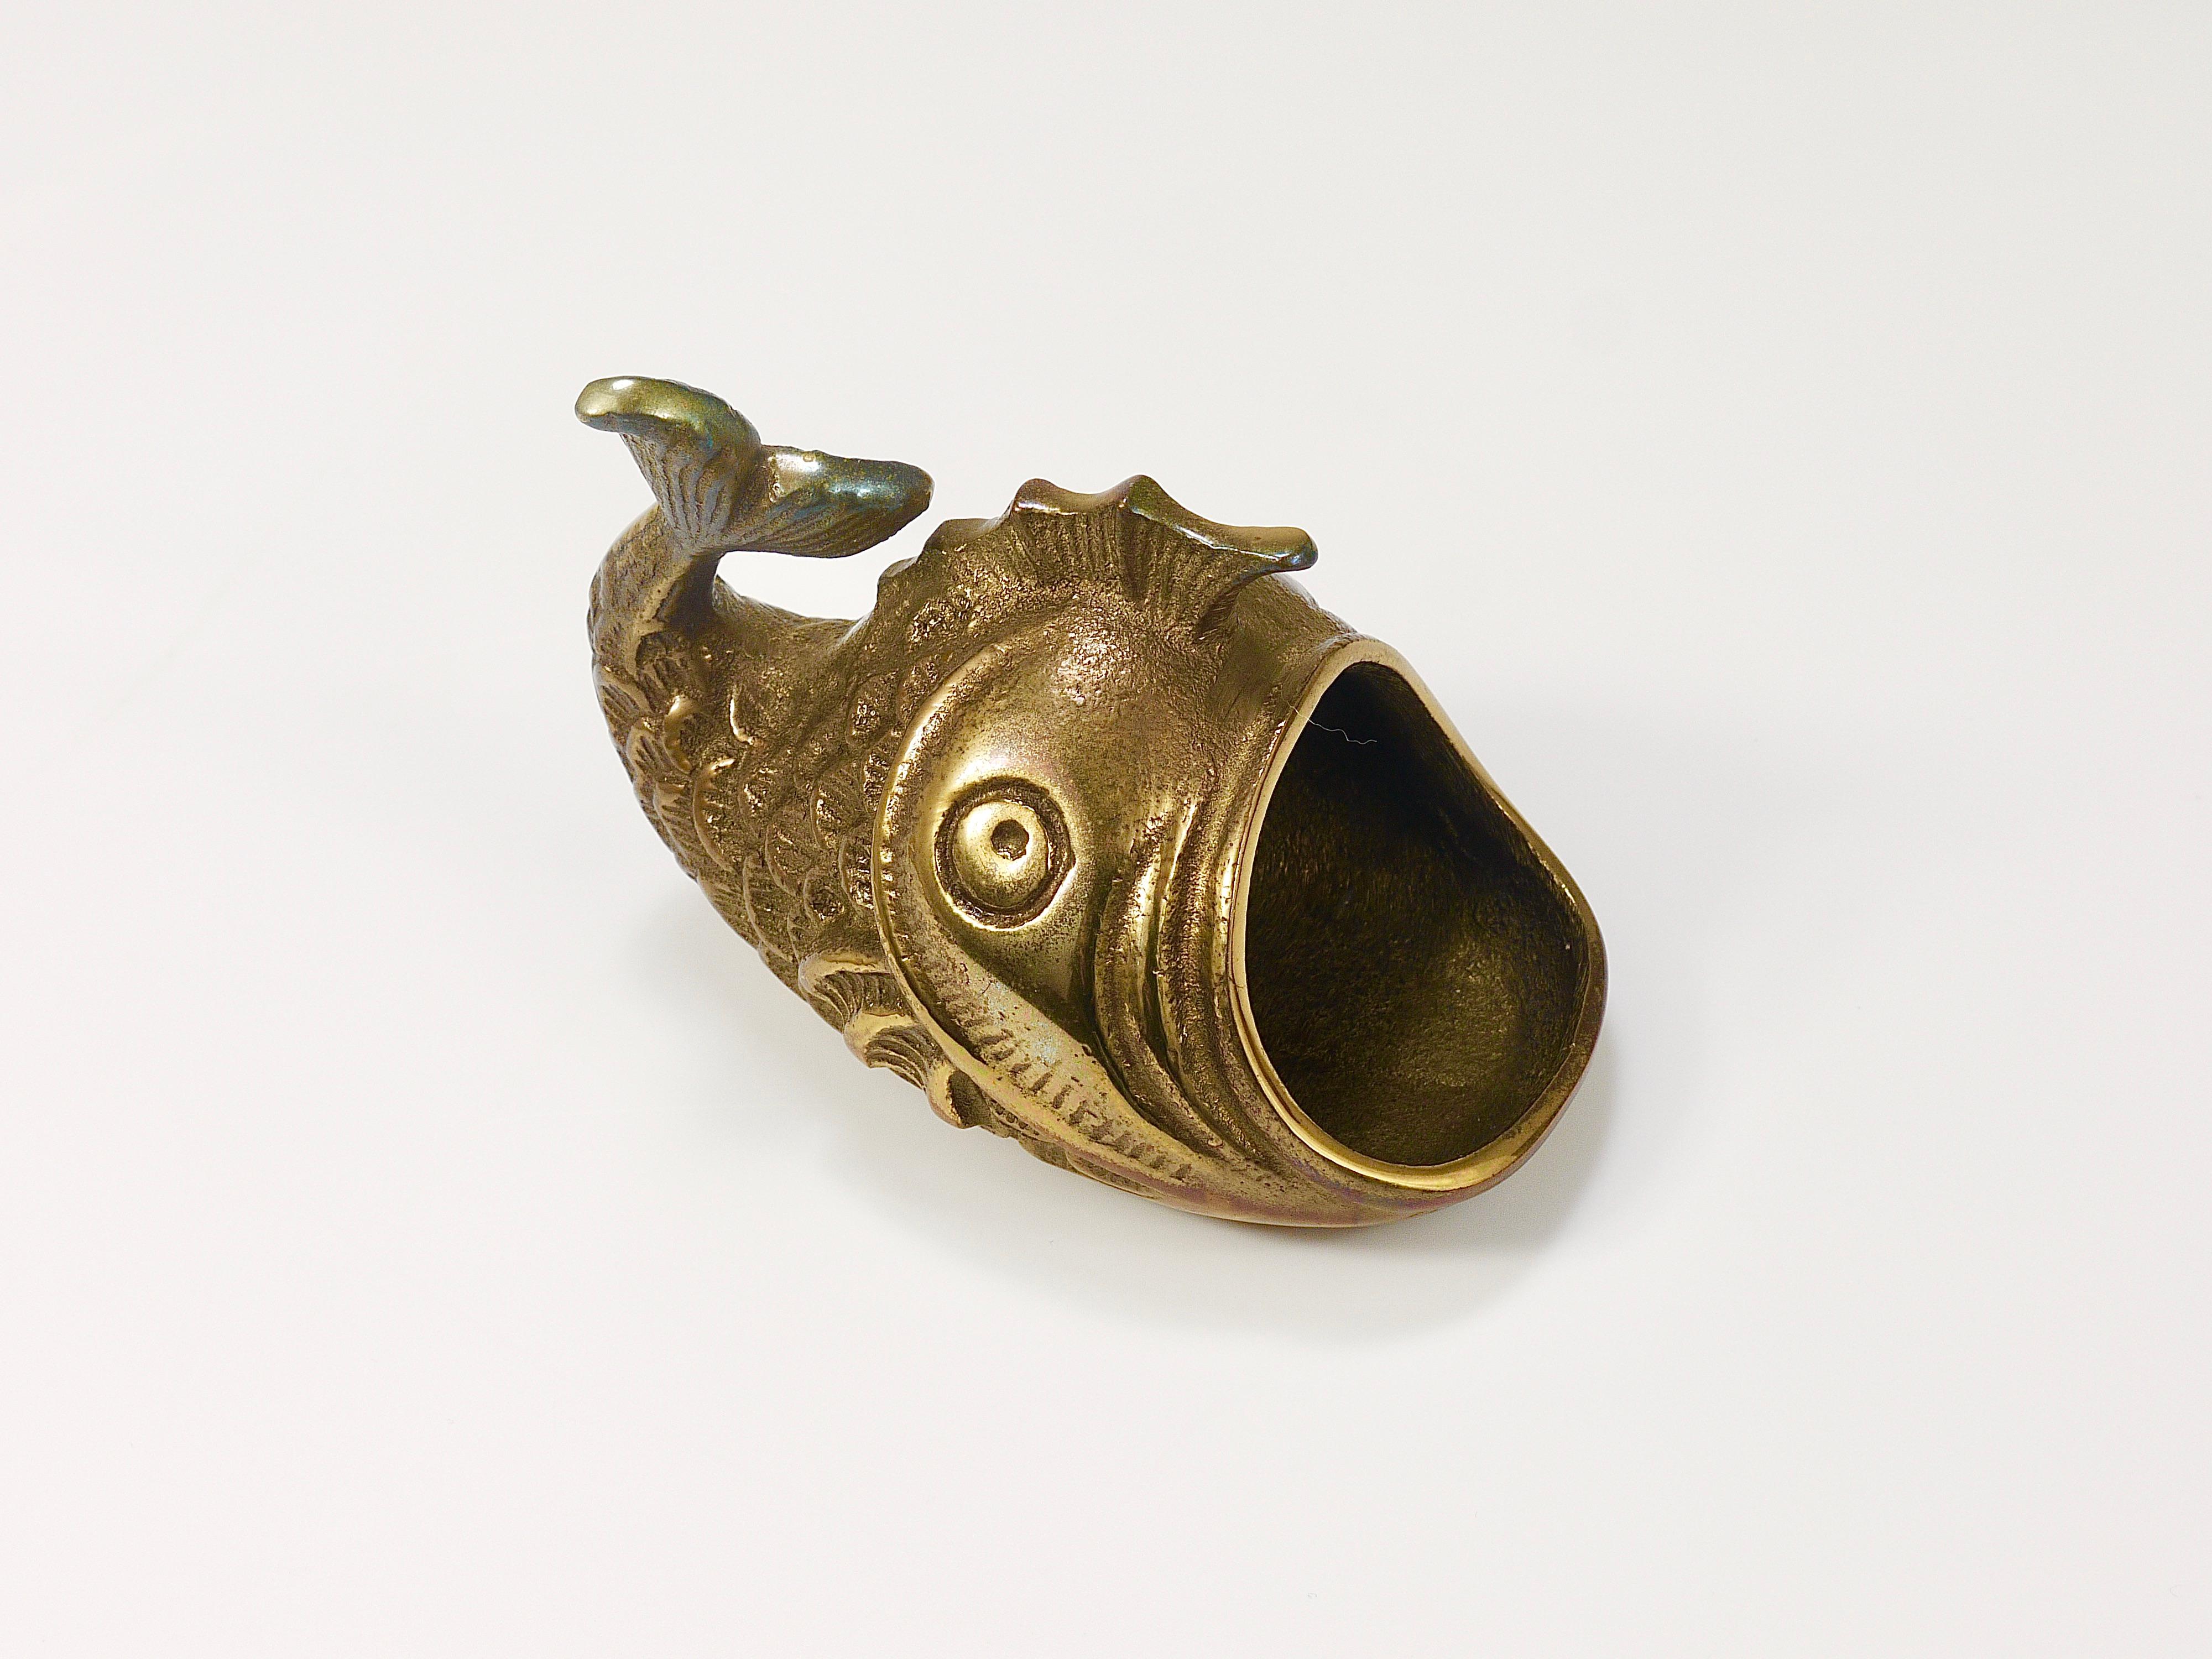 Walter Bosse Midcentury Fish Sculpture Brass Ashtray, Austria, 1950s For Sale 11